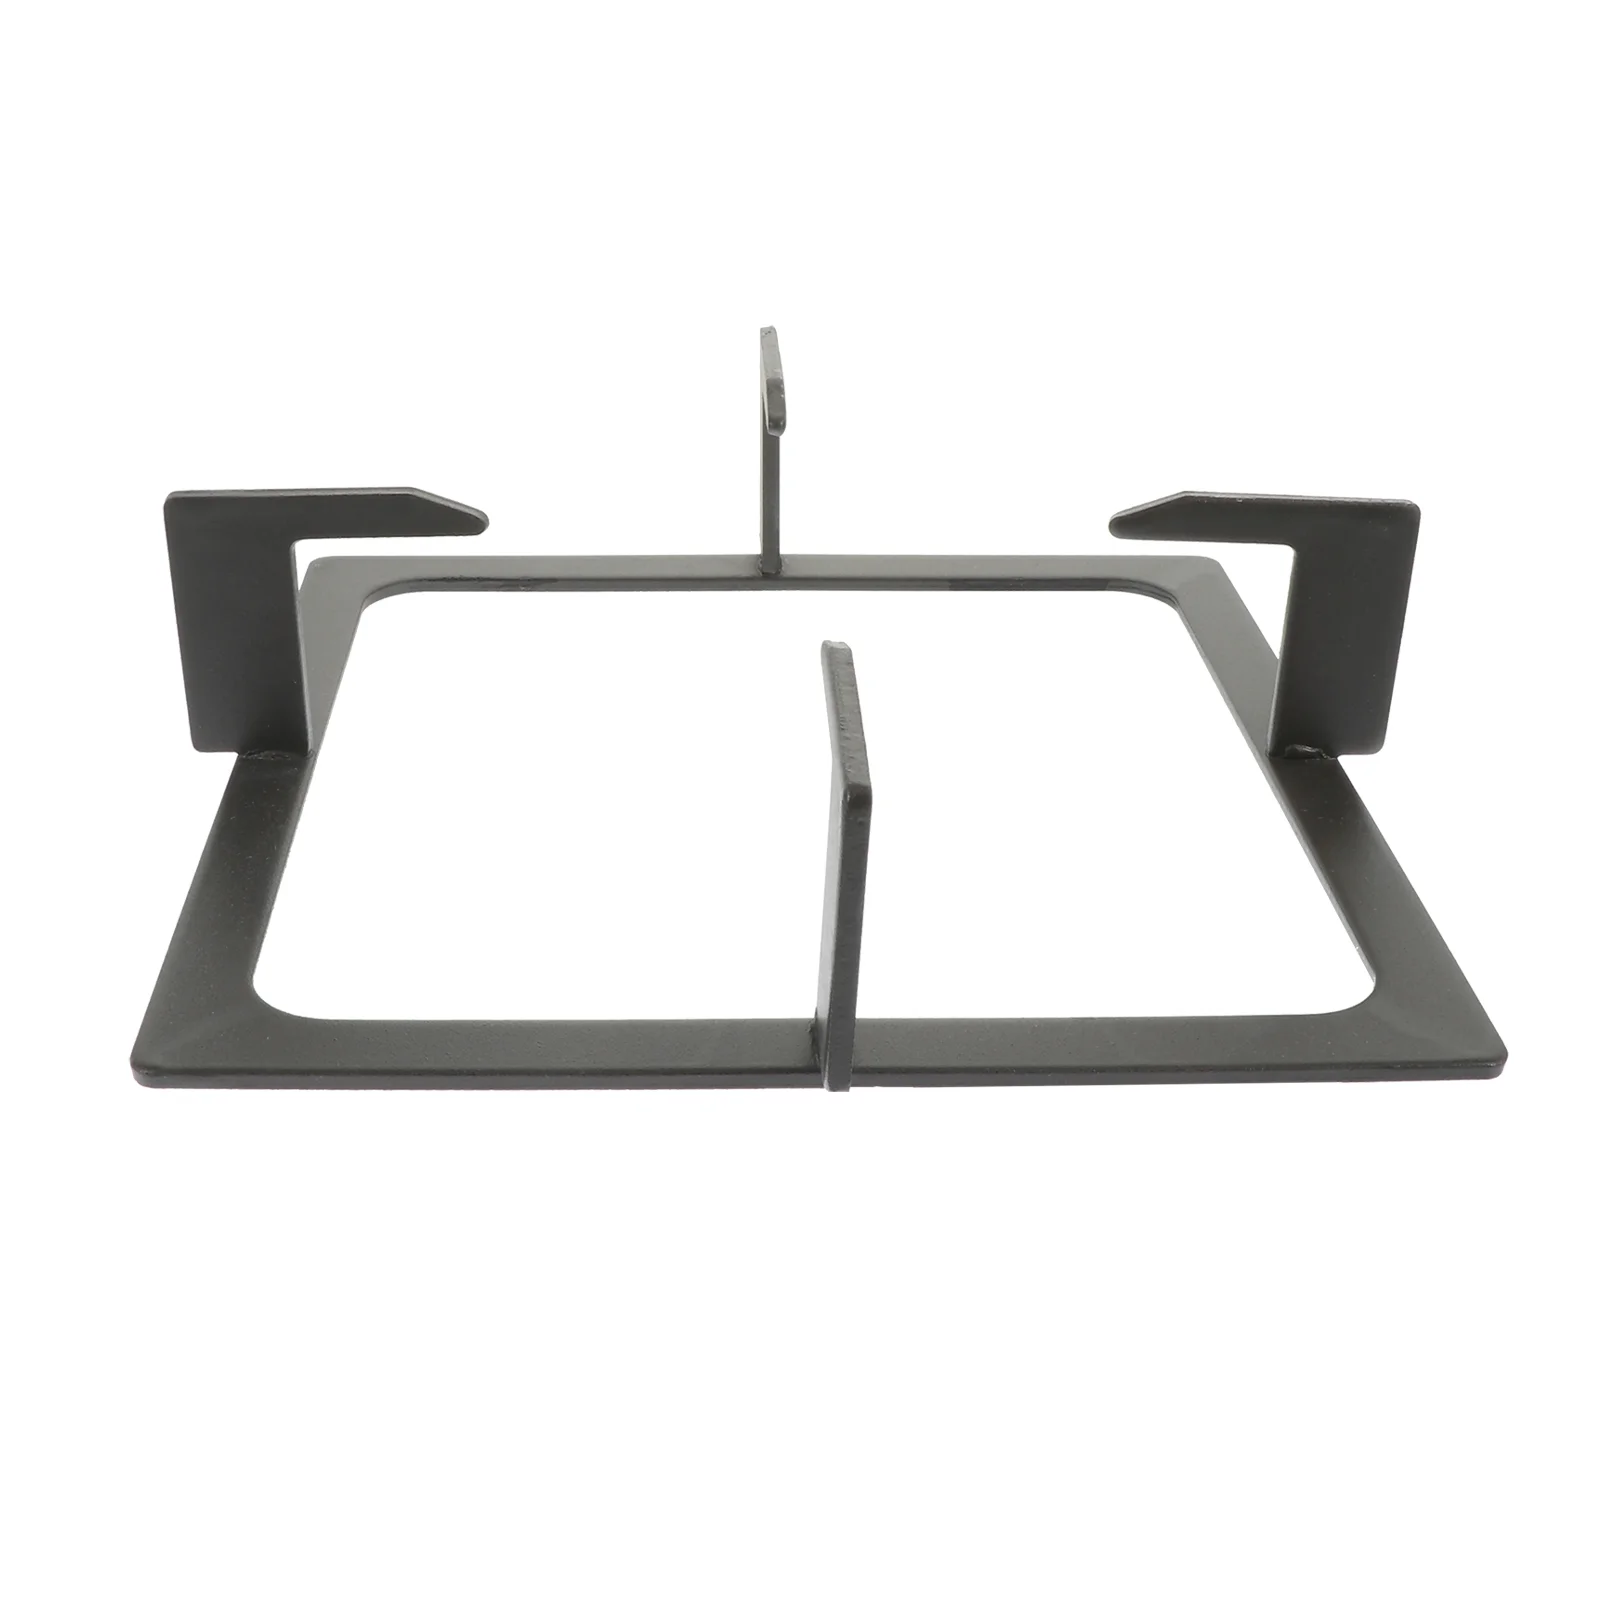 

Rack Gas Stove Wok Stand Ring Support Iron Holder Burner Pot Cast Range Pan Cooktop Grate Cooker Trivet Non Metal Windproof